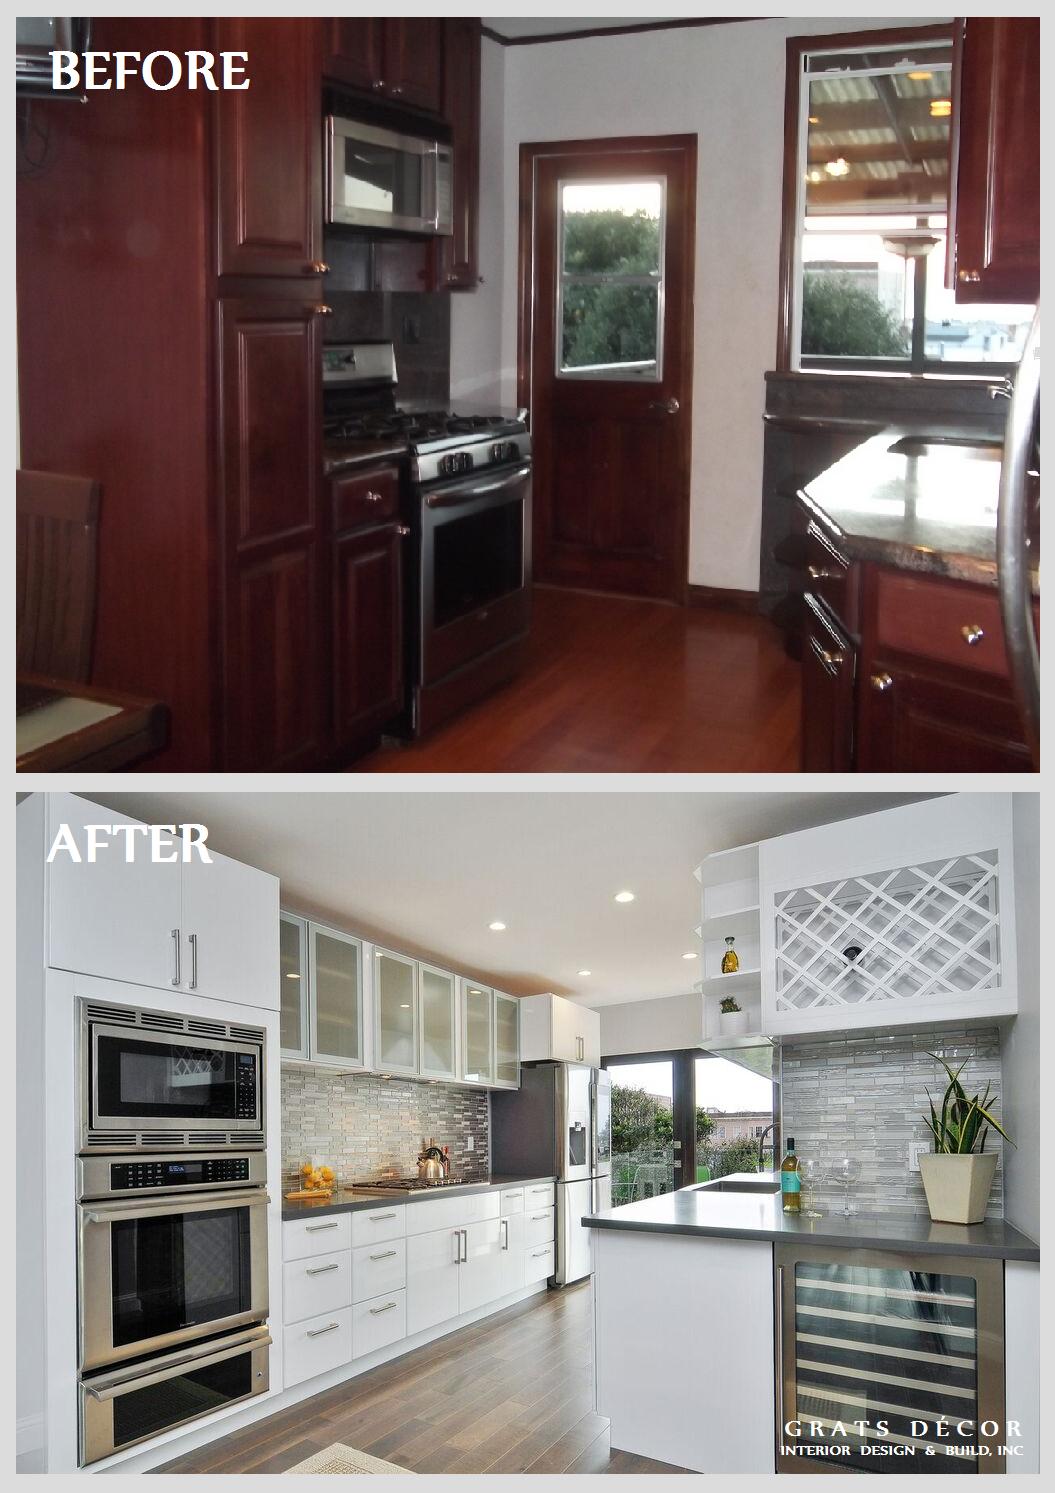 Sunset Kitchen Remodel - Grats Decor Interior Design & Build Inc.